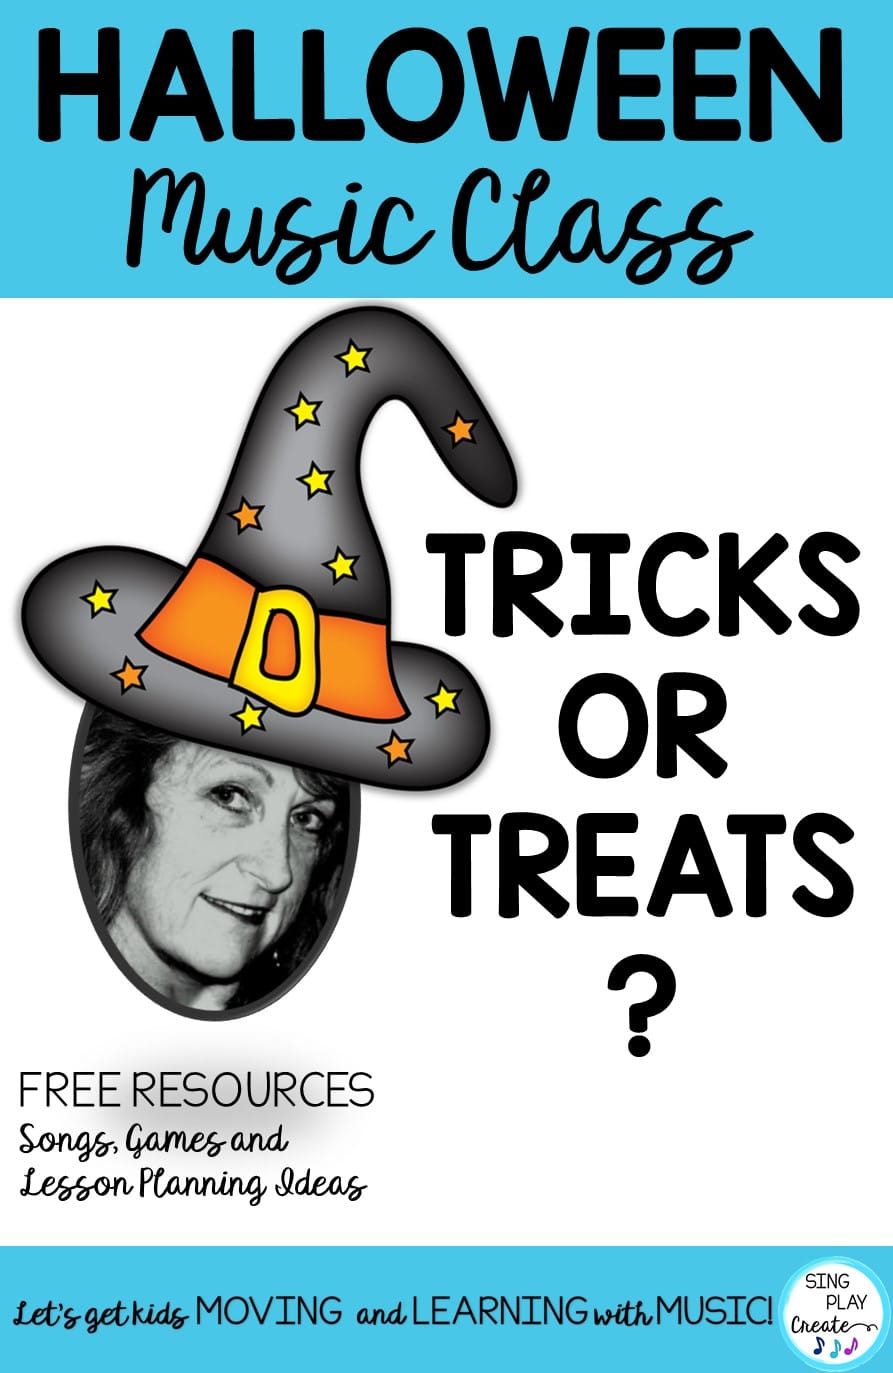 Halloween Music Class Tricks or Treats?